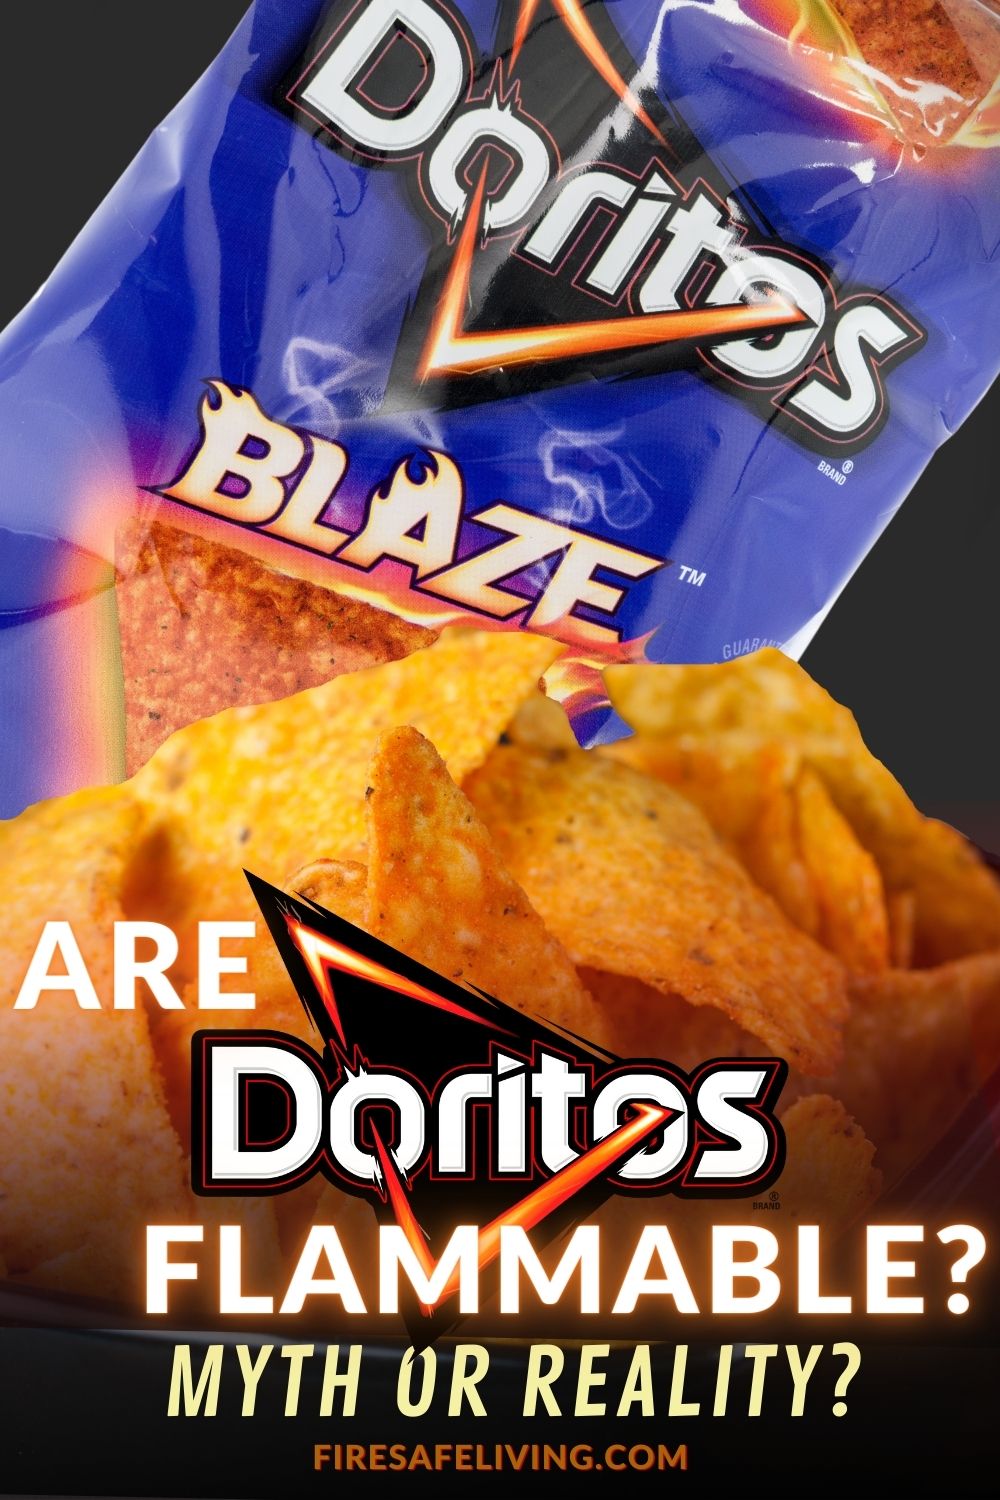 Are Doritos Flammable Myth or Reality Pin Image